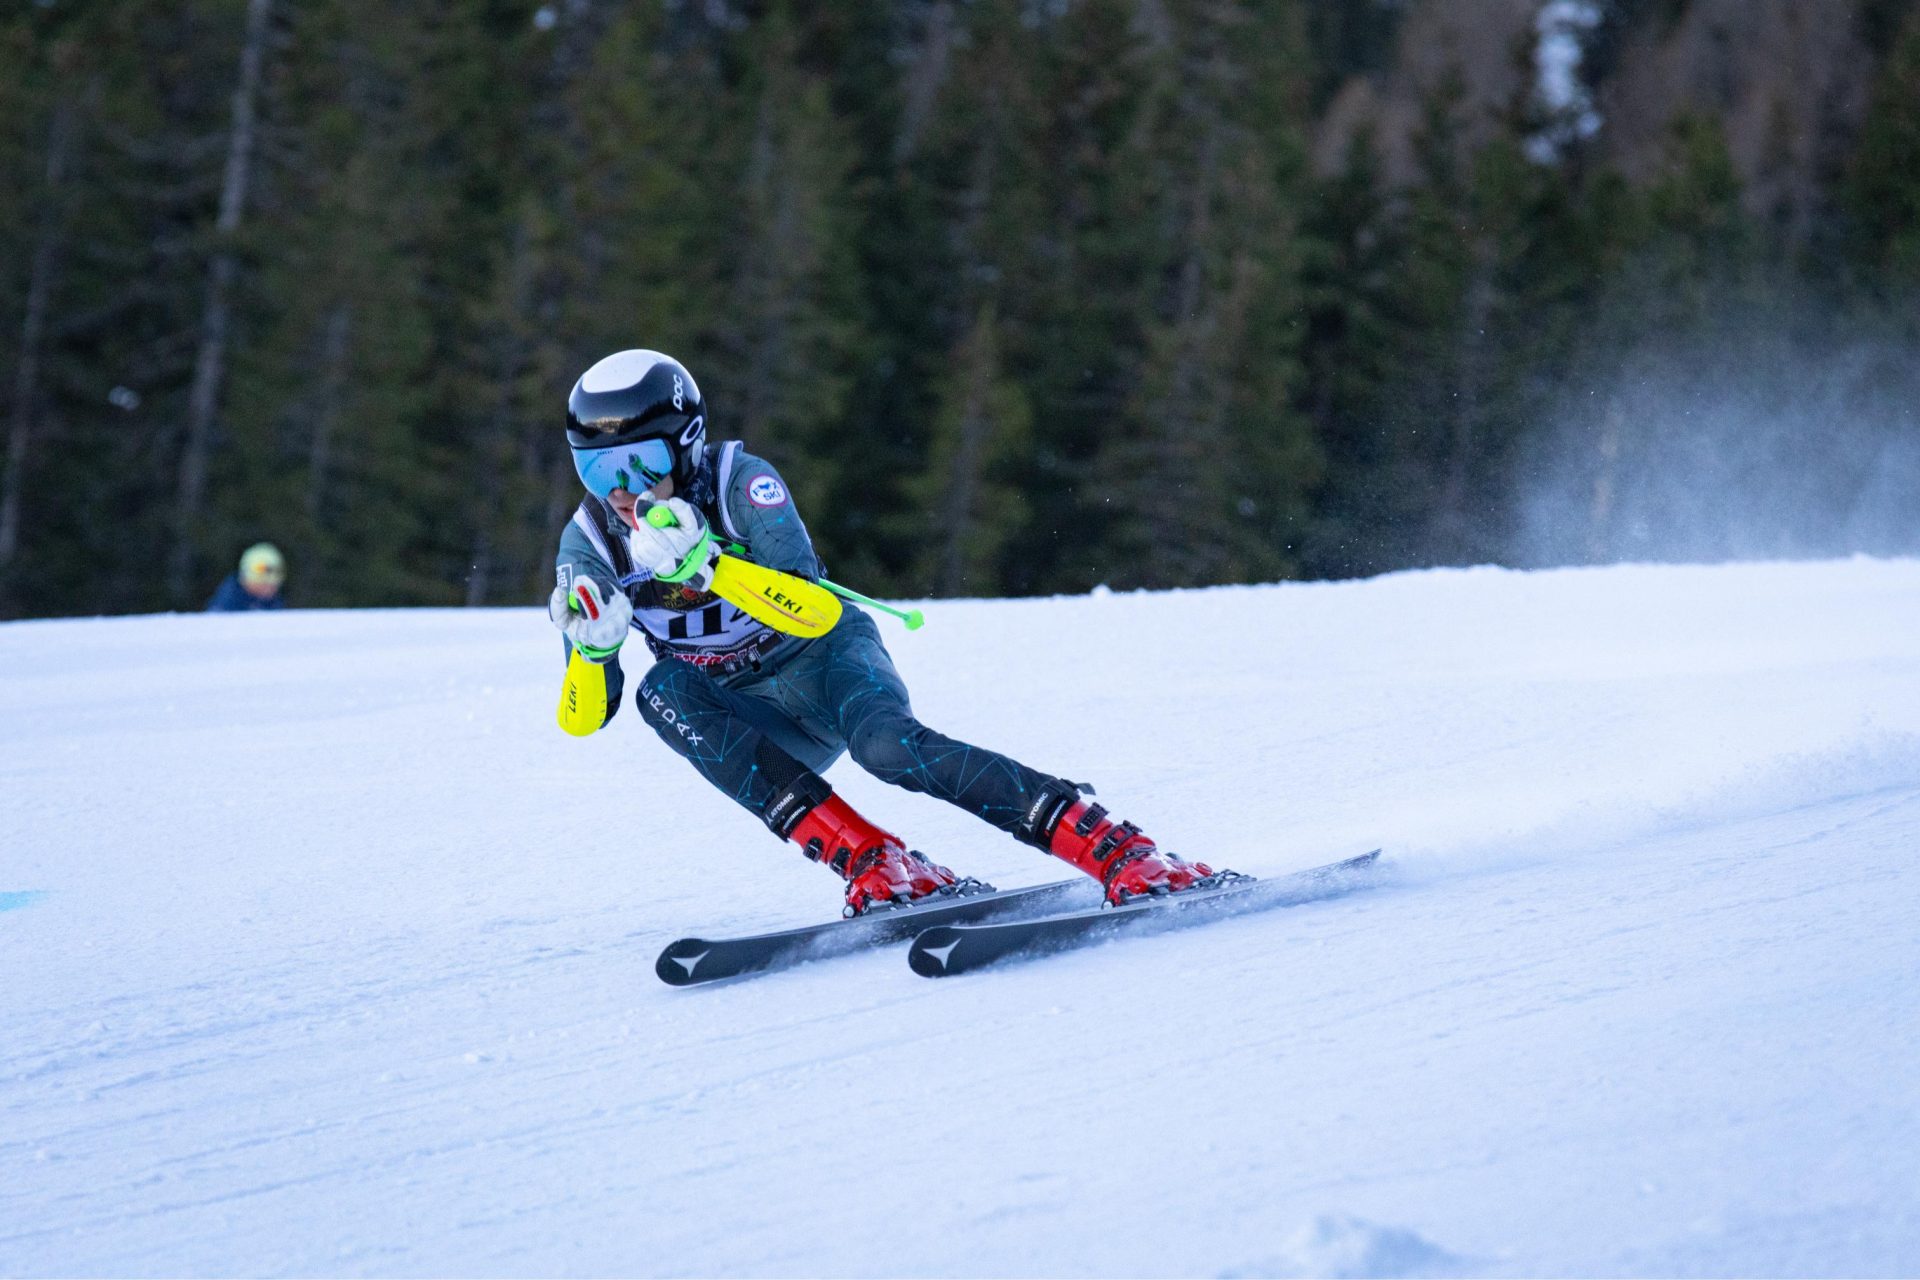 Fox Ski Academy Slovakia 23/24